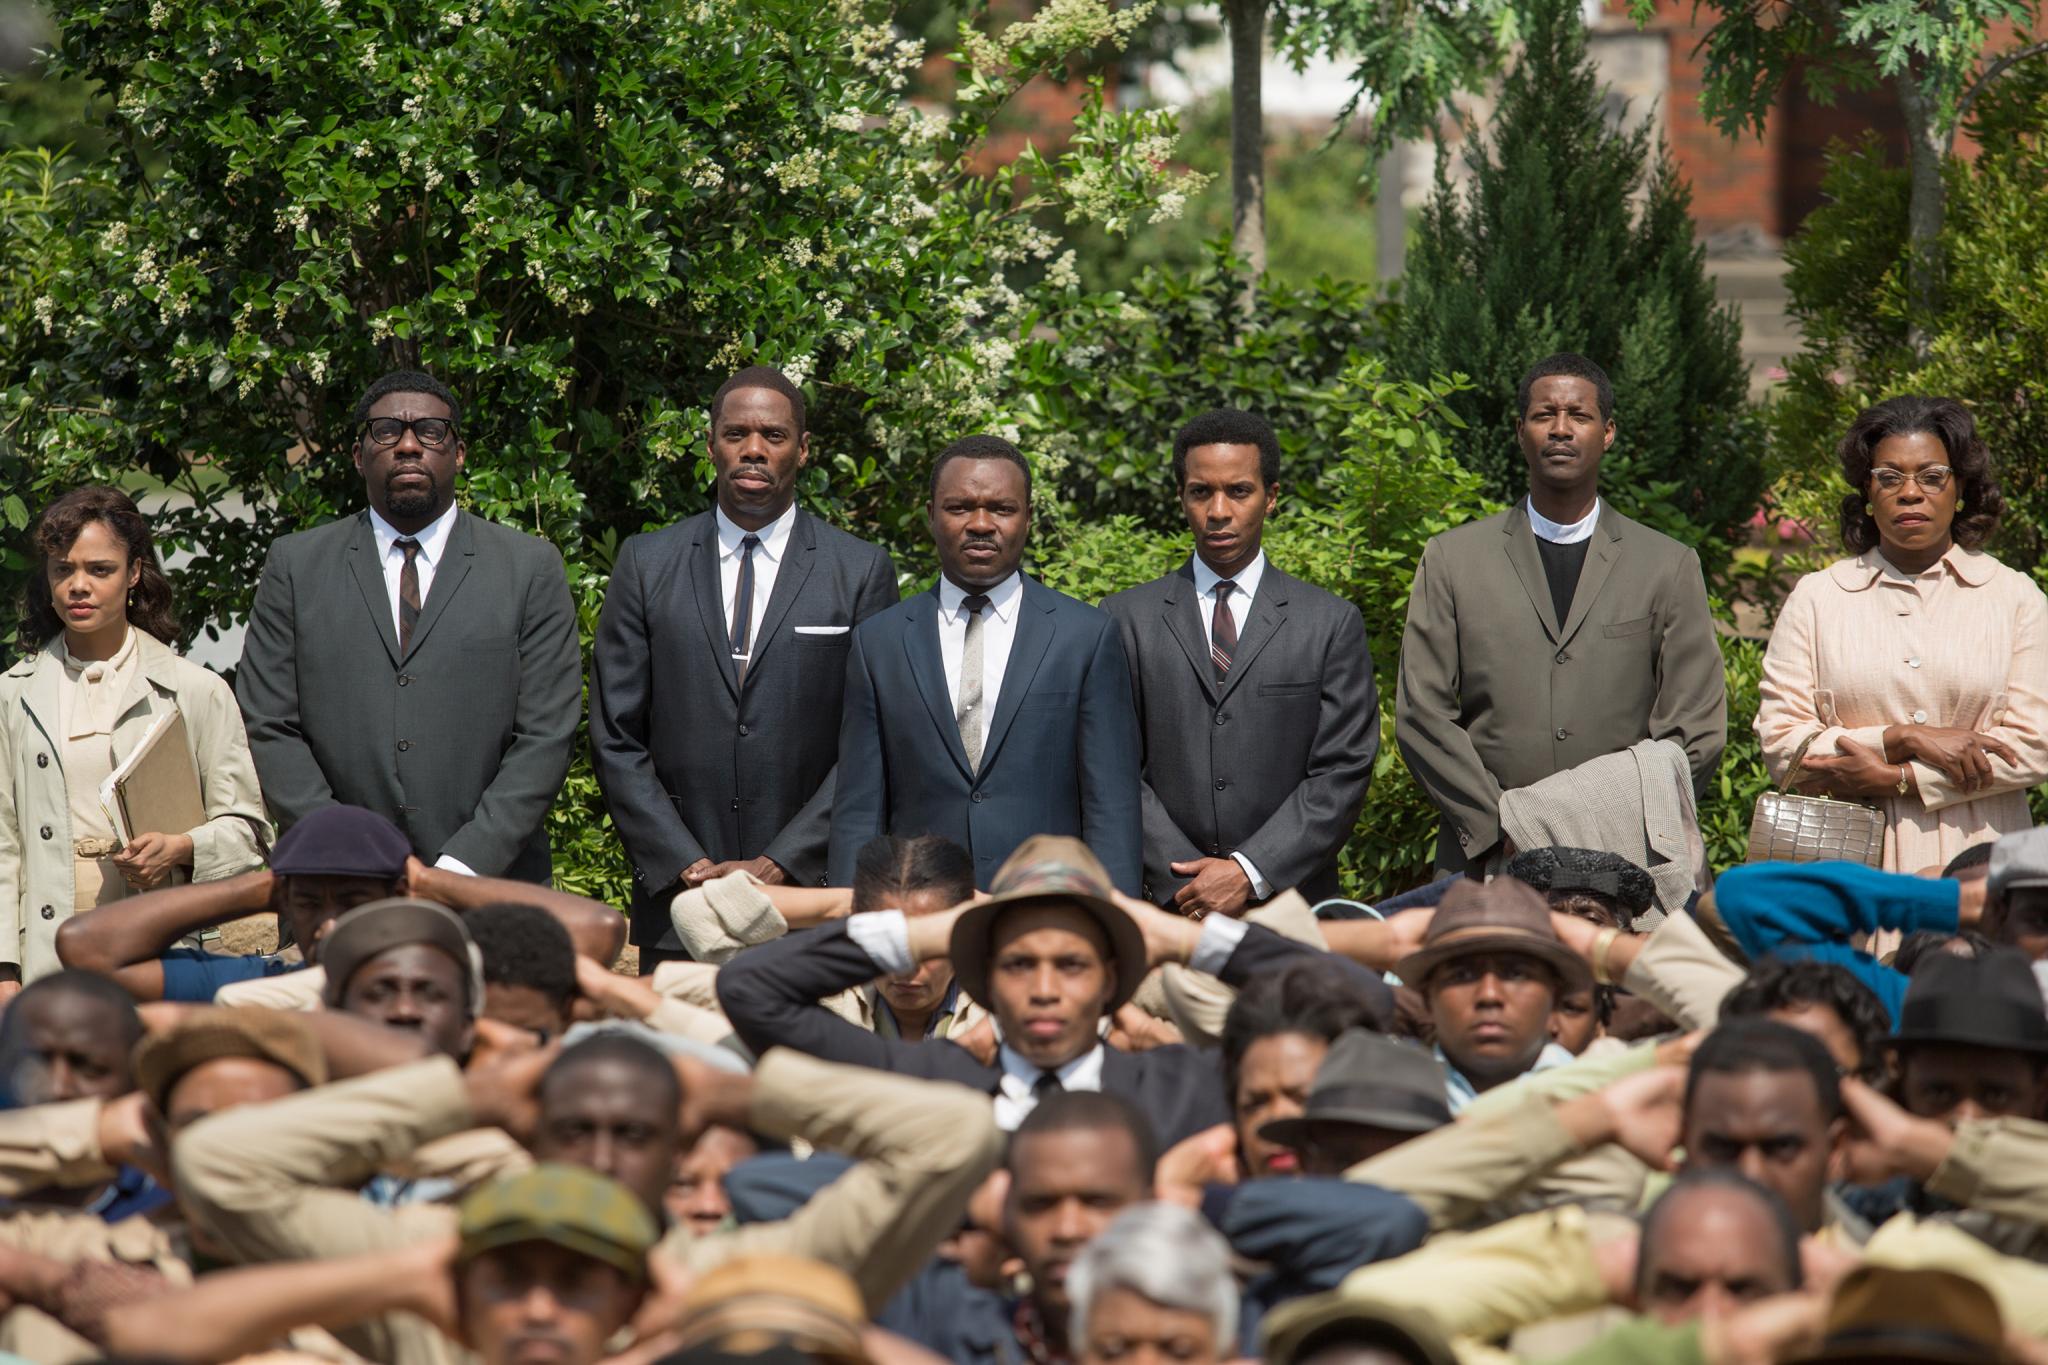 Watch Oprah and David Oyelowo in Trailer for MLK Biopic, 'Selma'
